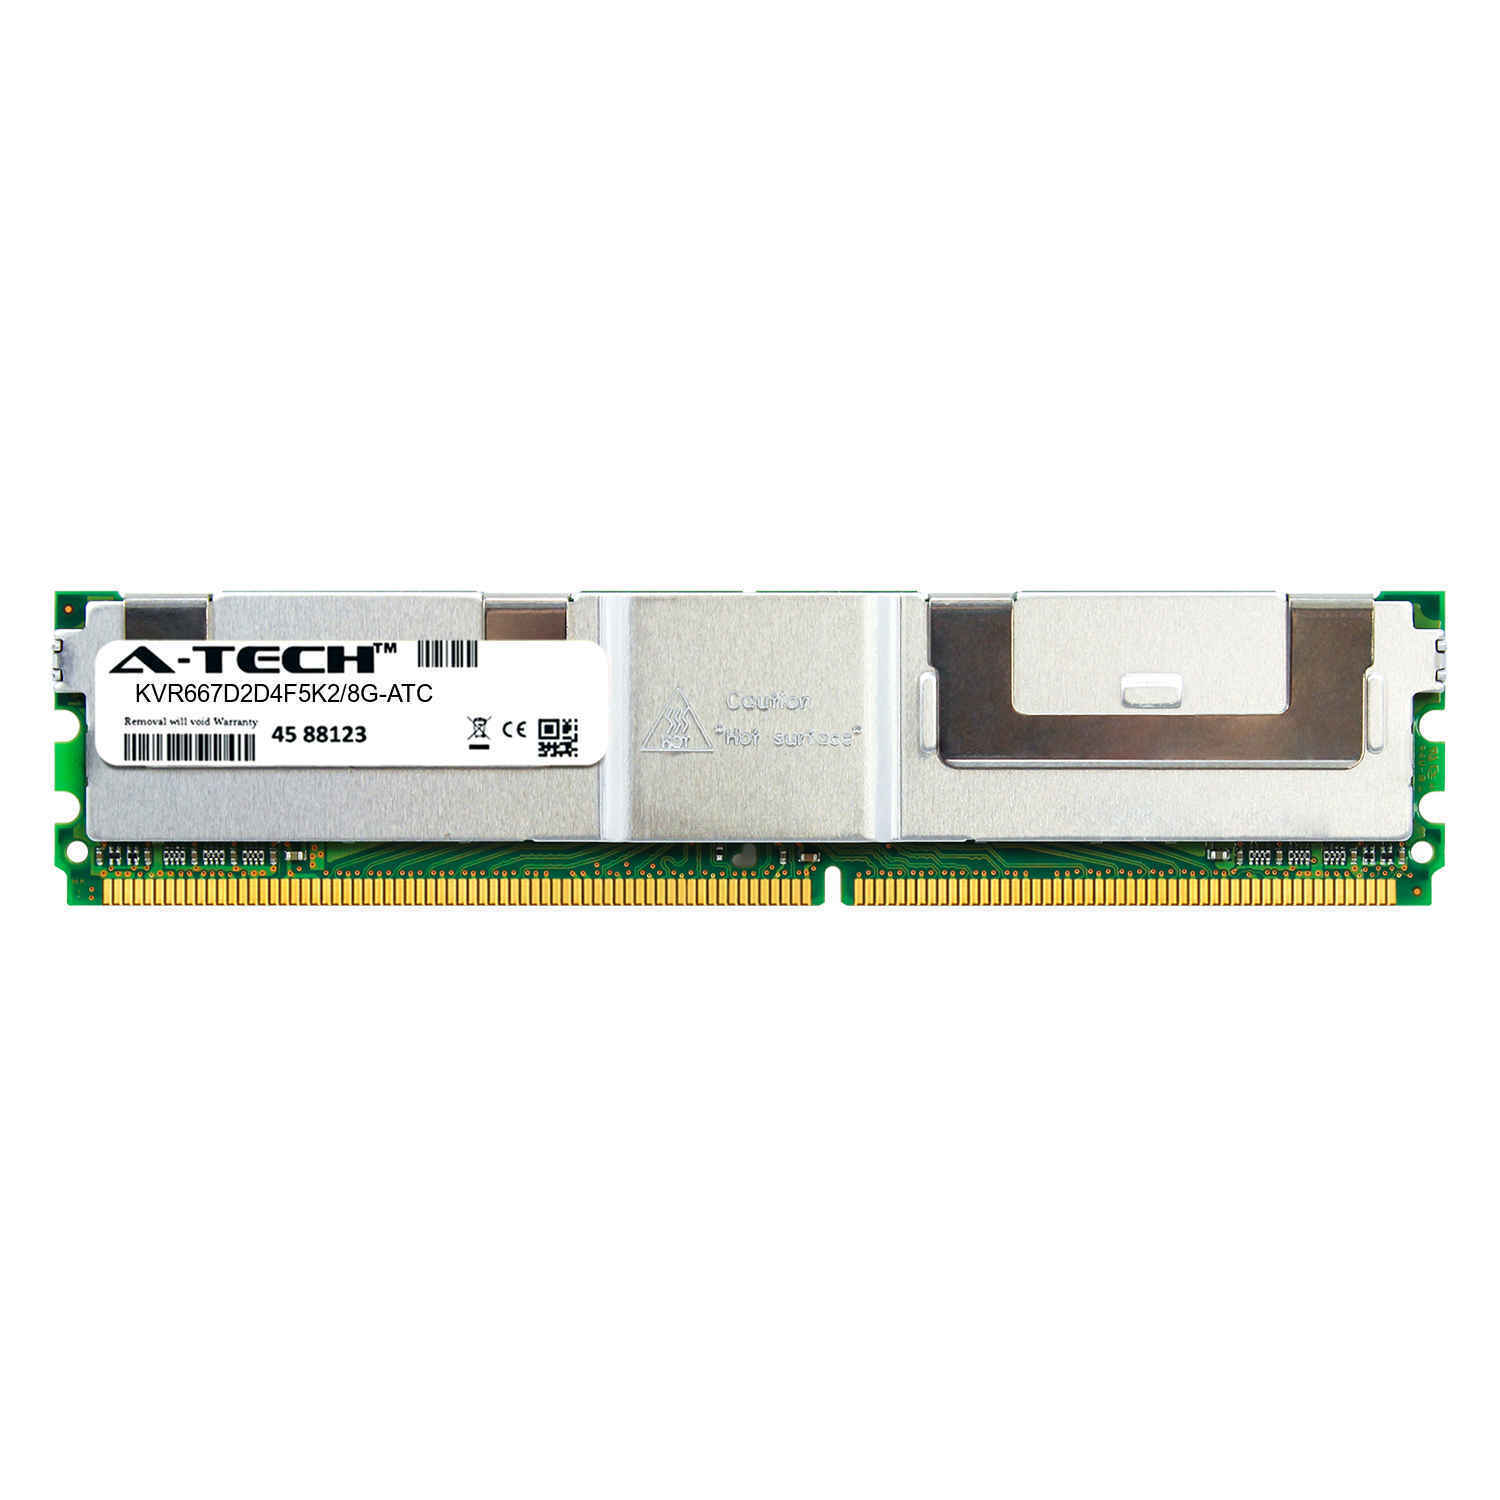 4GB PC2-5300F FBDIMM (Kingston KVR667D2D4F5K2/8G Equivalent) Server Memory RAM